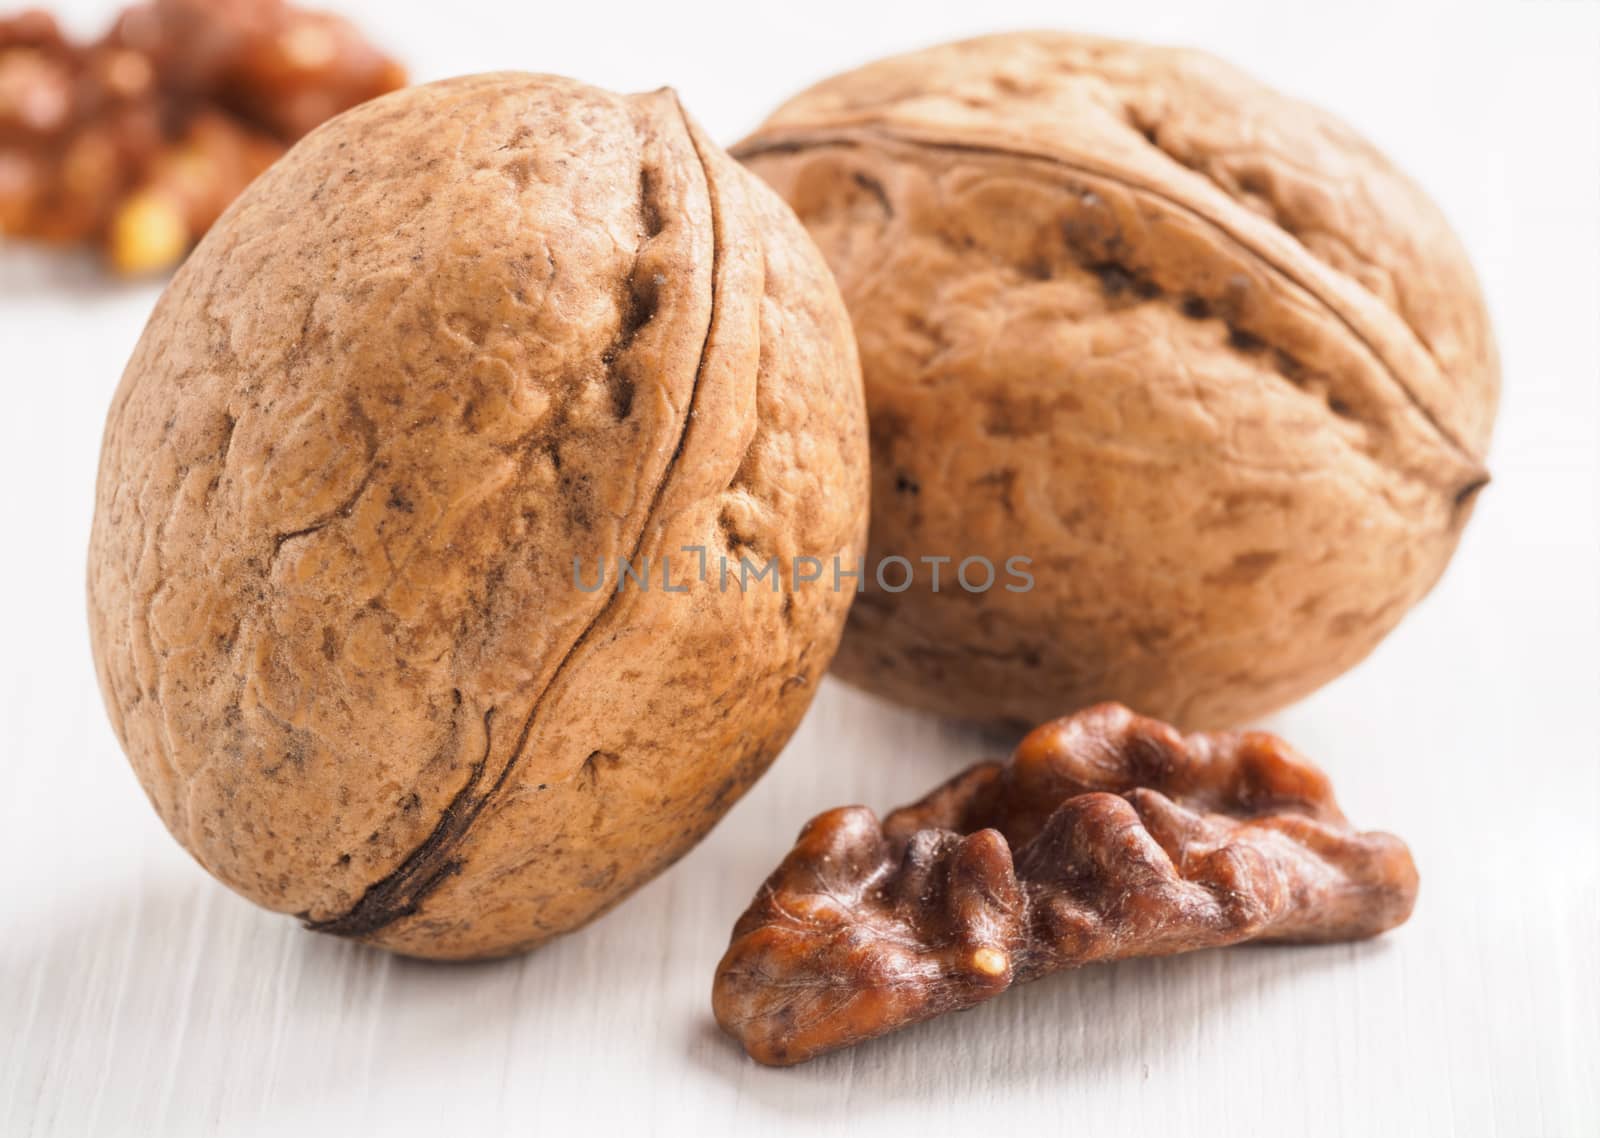 inshell walnut on white wooden background by fascinadora